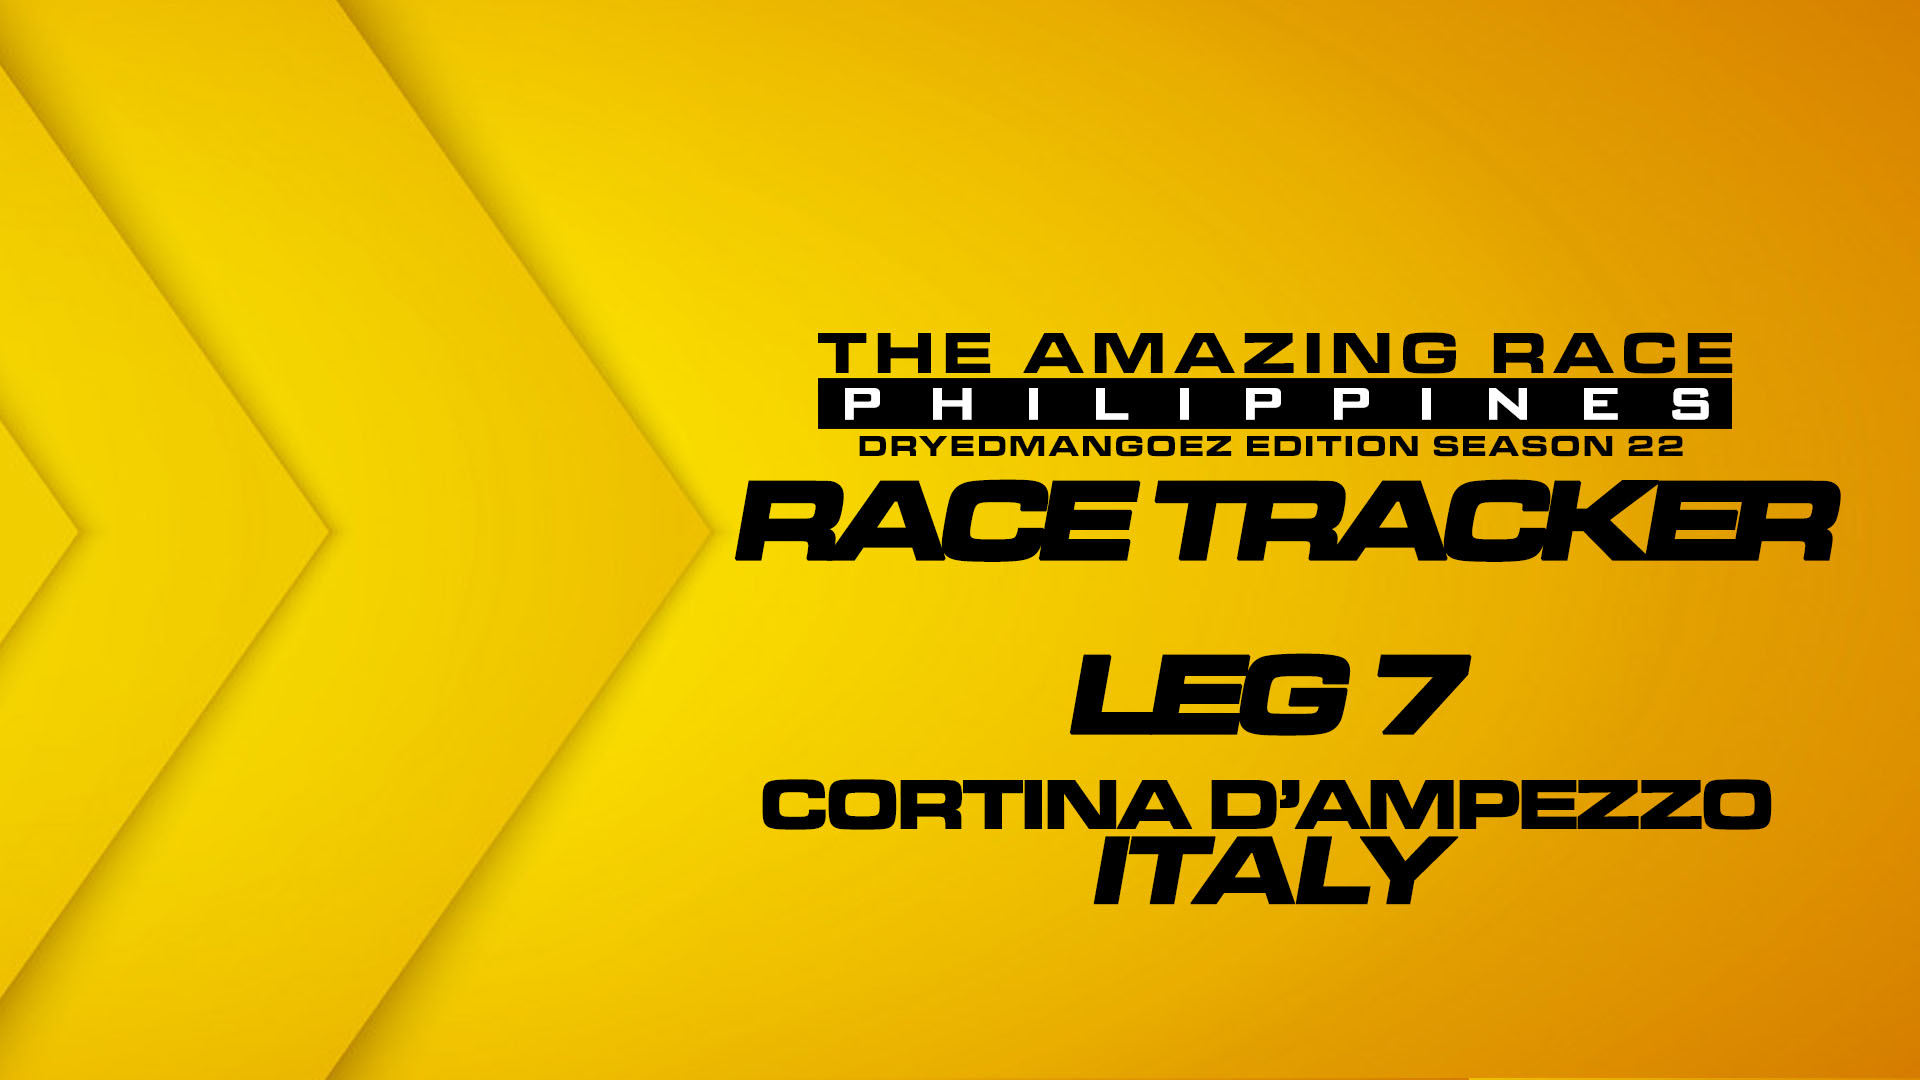 The Amazing Race Philippines: DryedMangoez Edition Season 22 Race Tracker – Leg 7